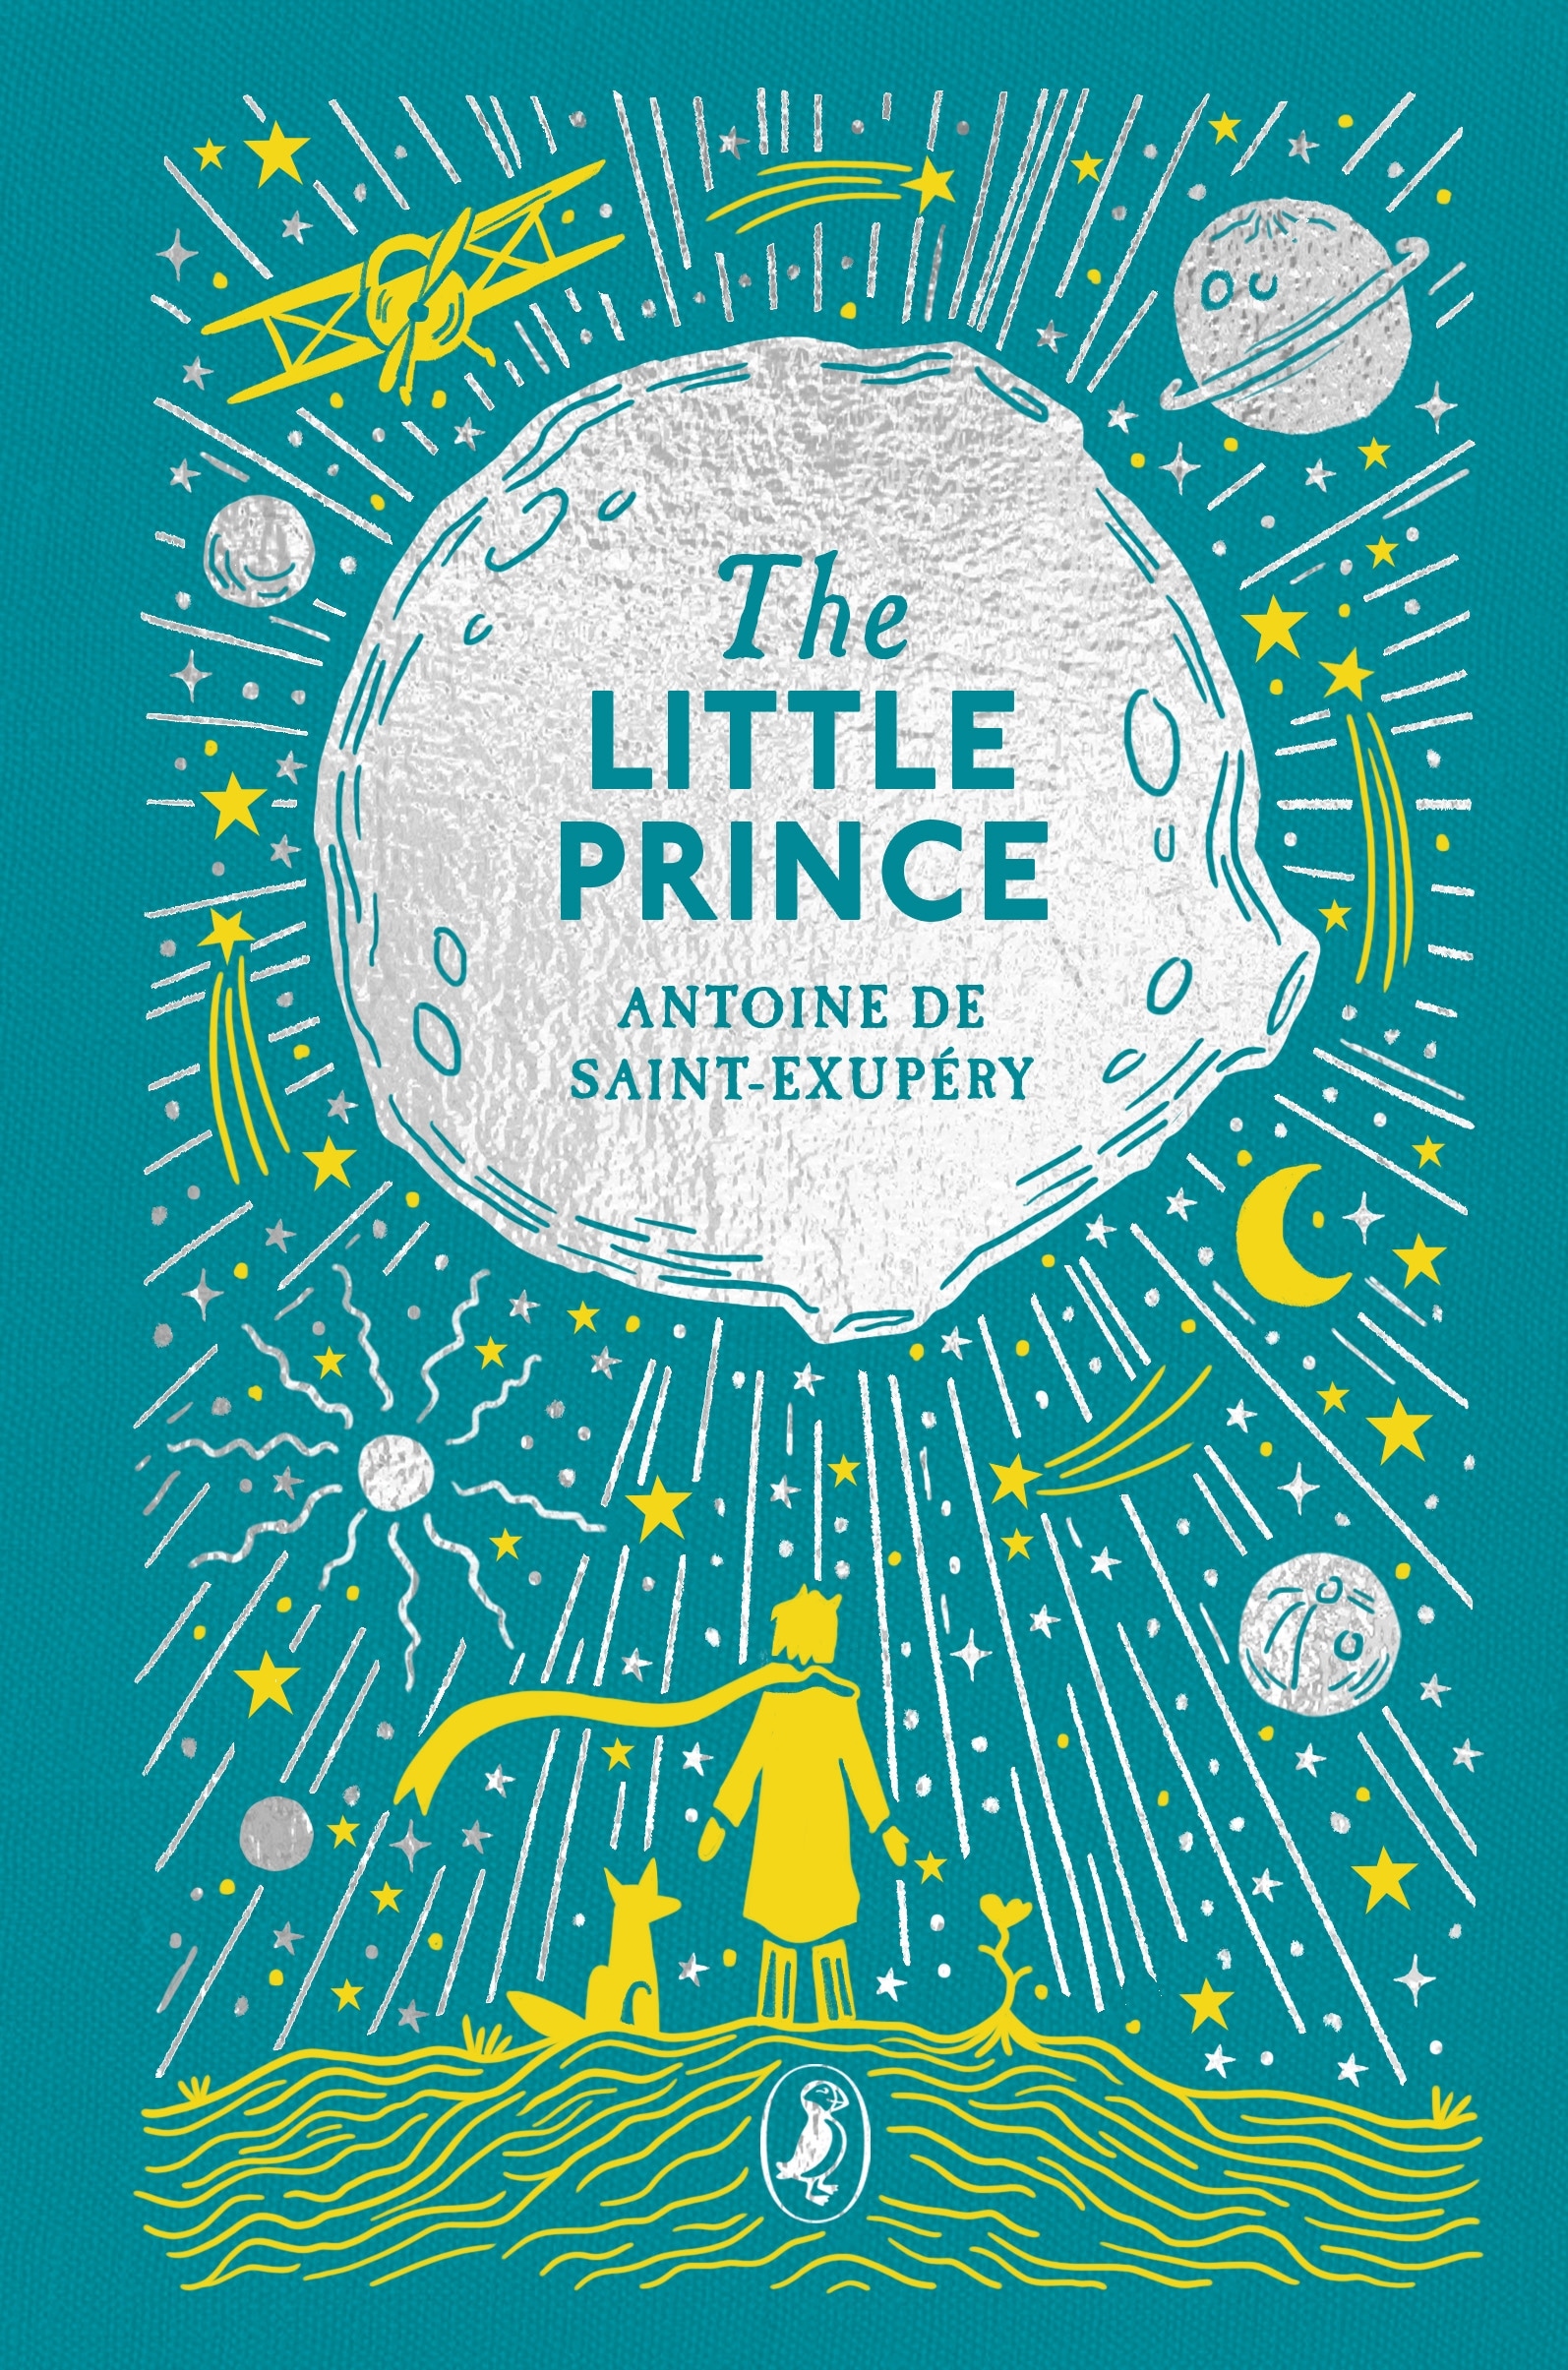 Book “The Little Prince” by Antoine de Saint-Exupéry — February 17, 2022